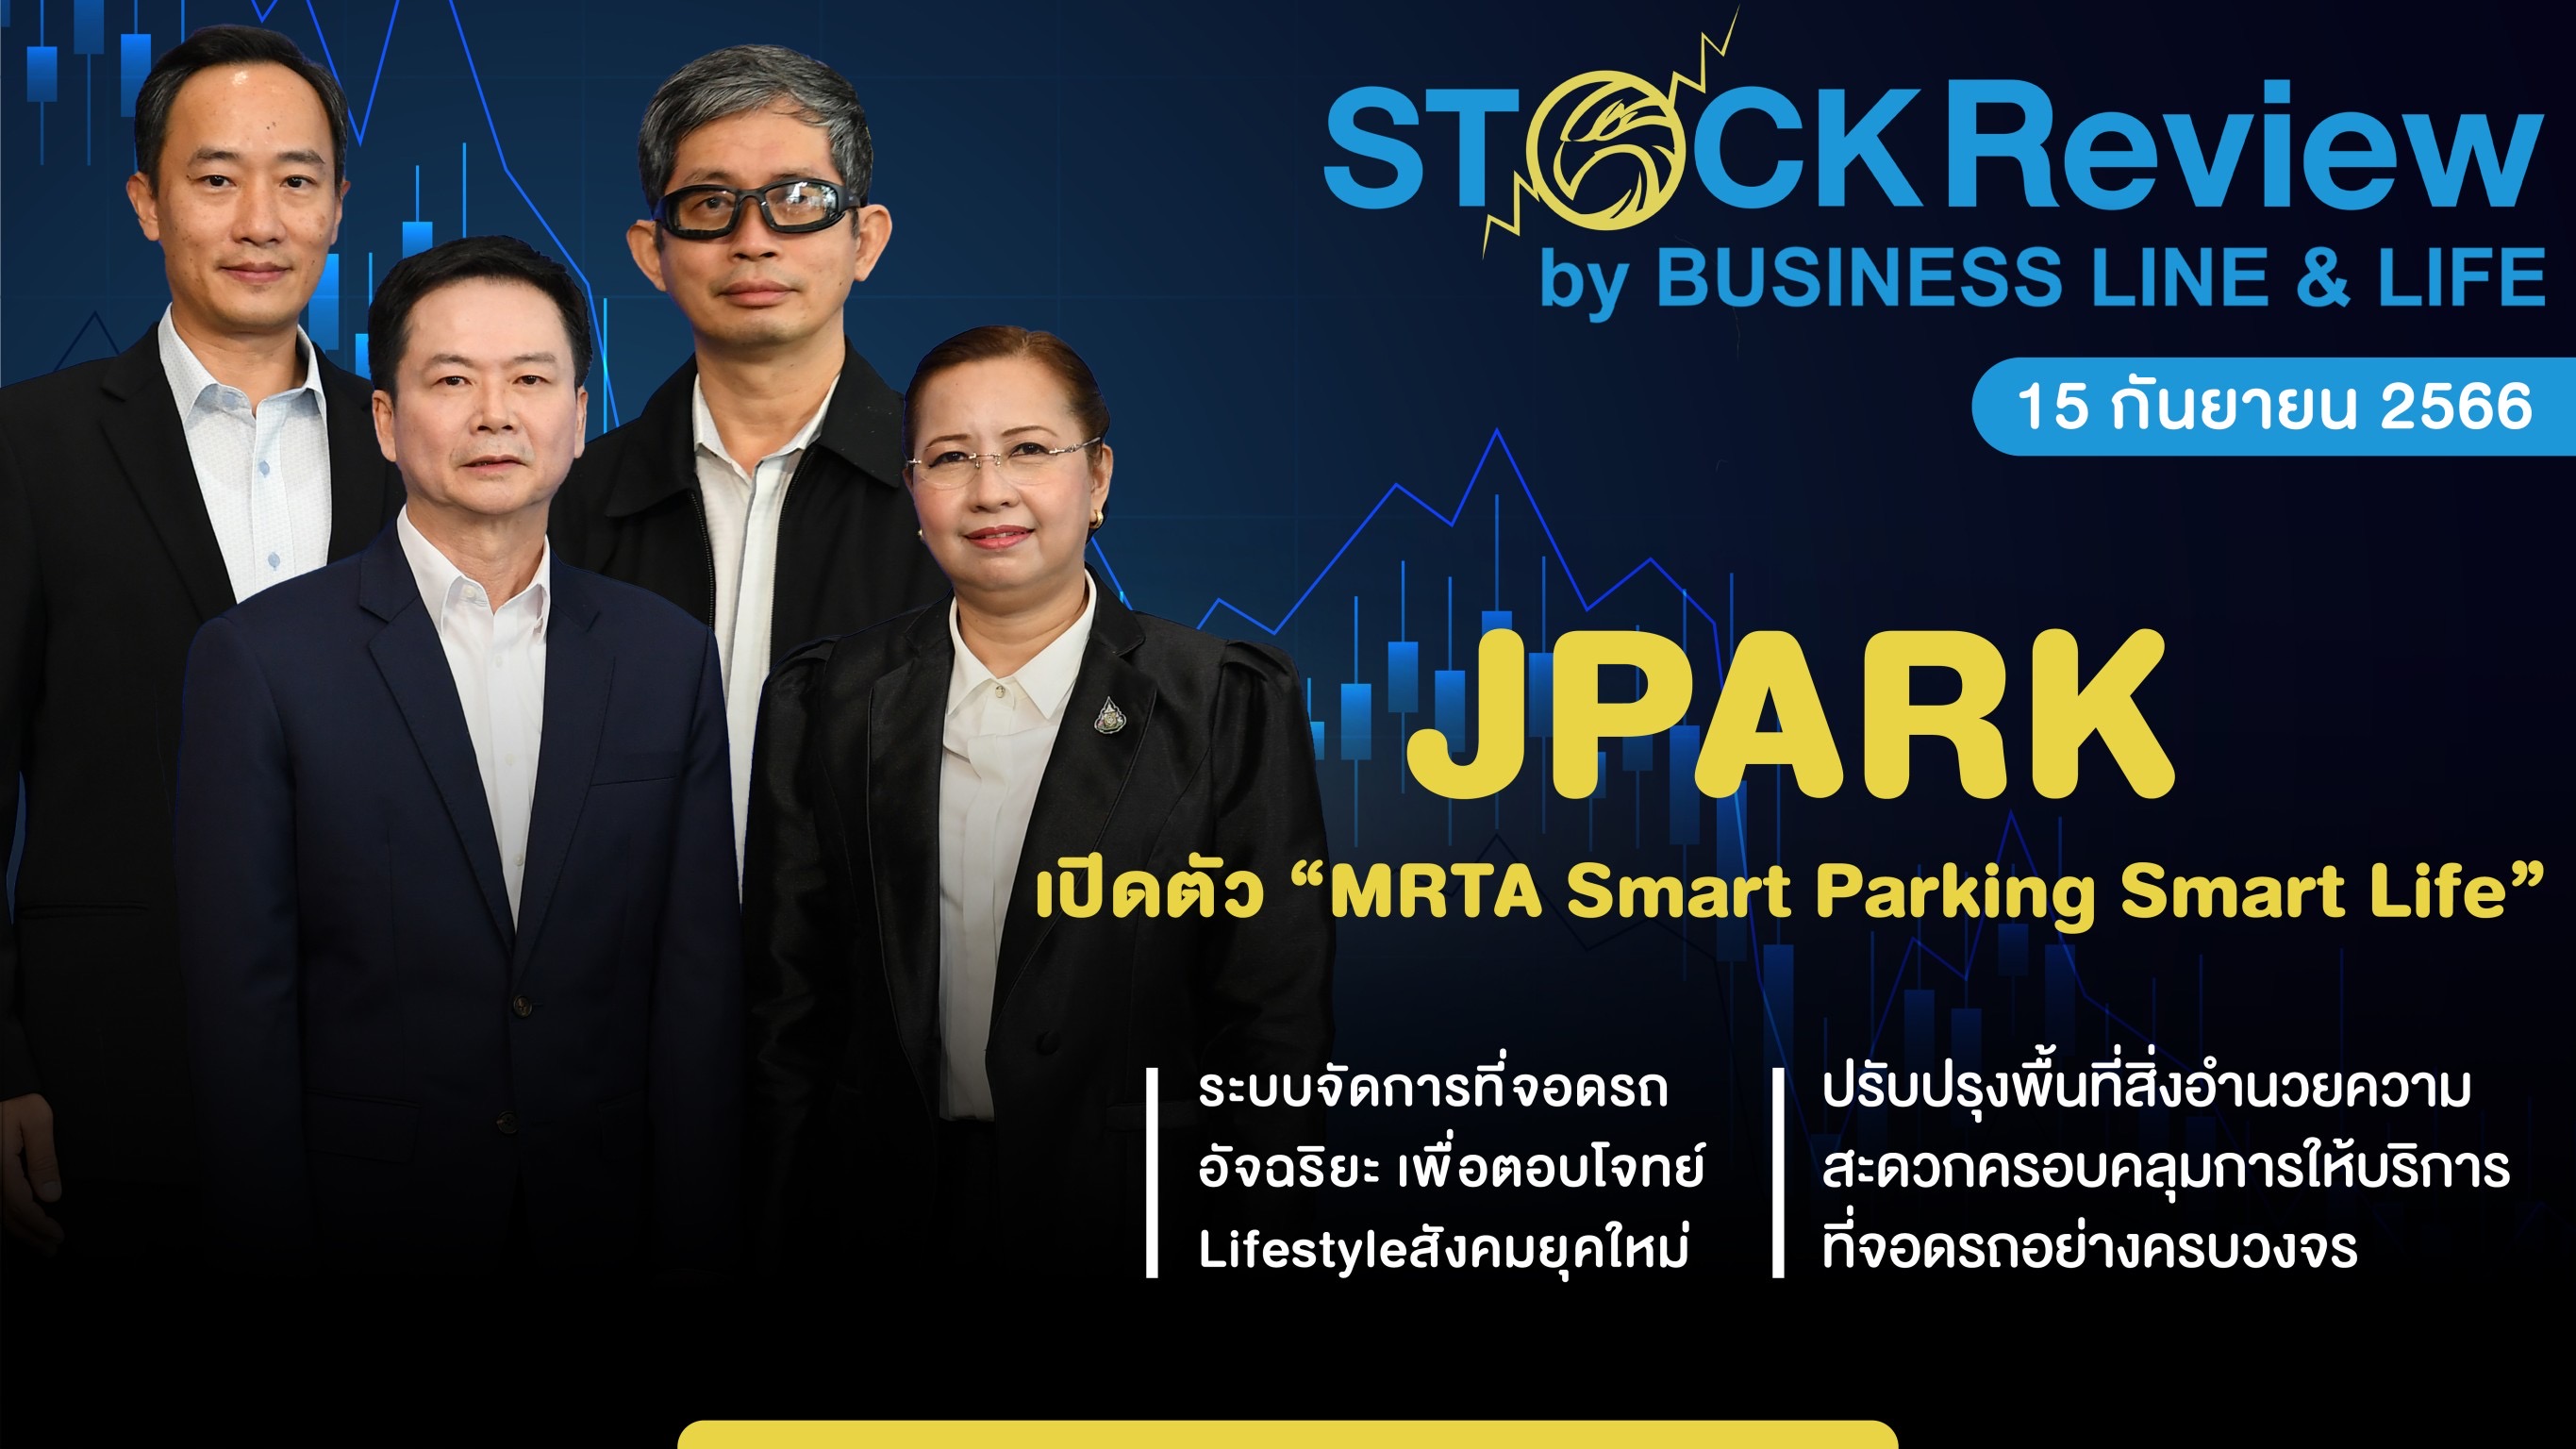 JPARK เปิดตัว “MRTA Smart Parking Smart Life” ตอบโจทย์สังคมเมืองยุคใหม่